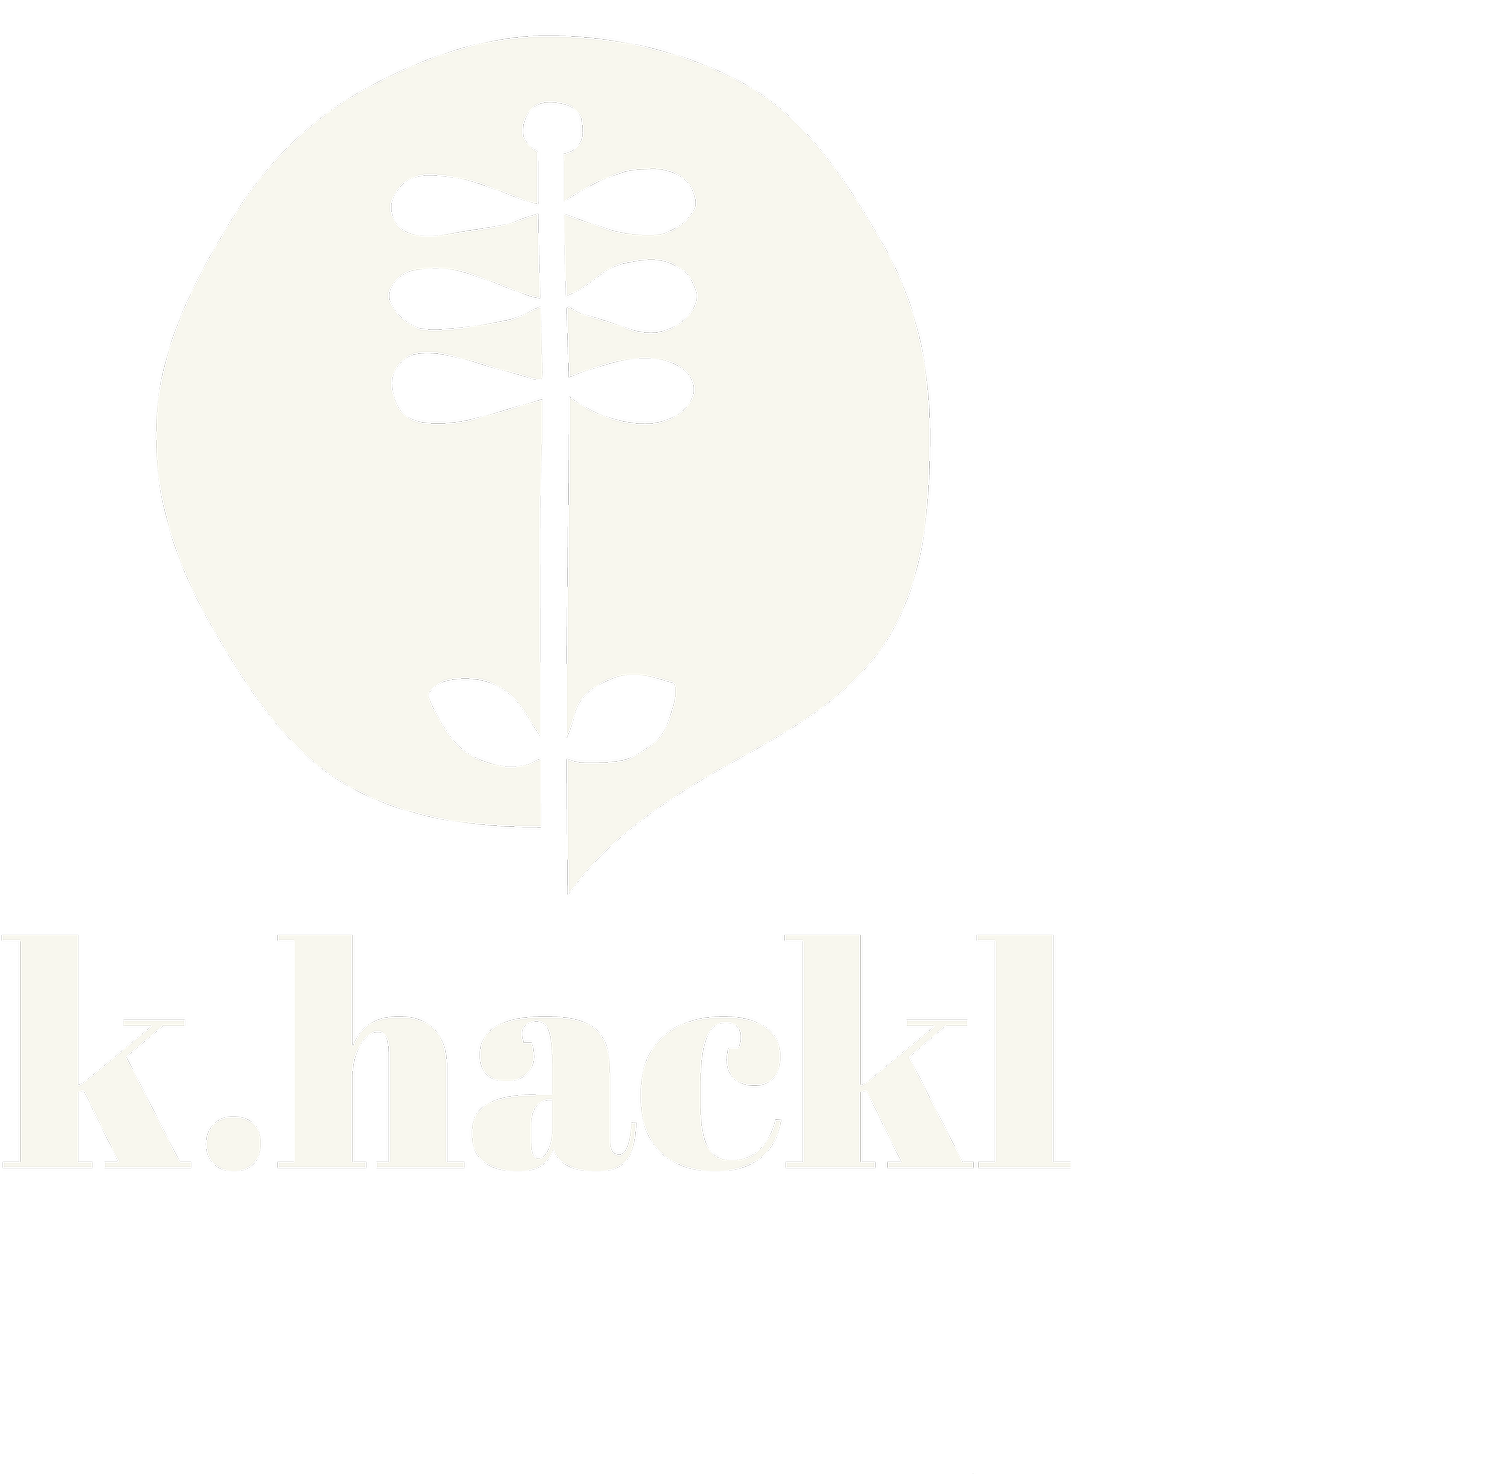 k.hackl